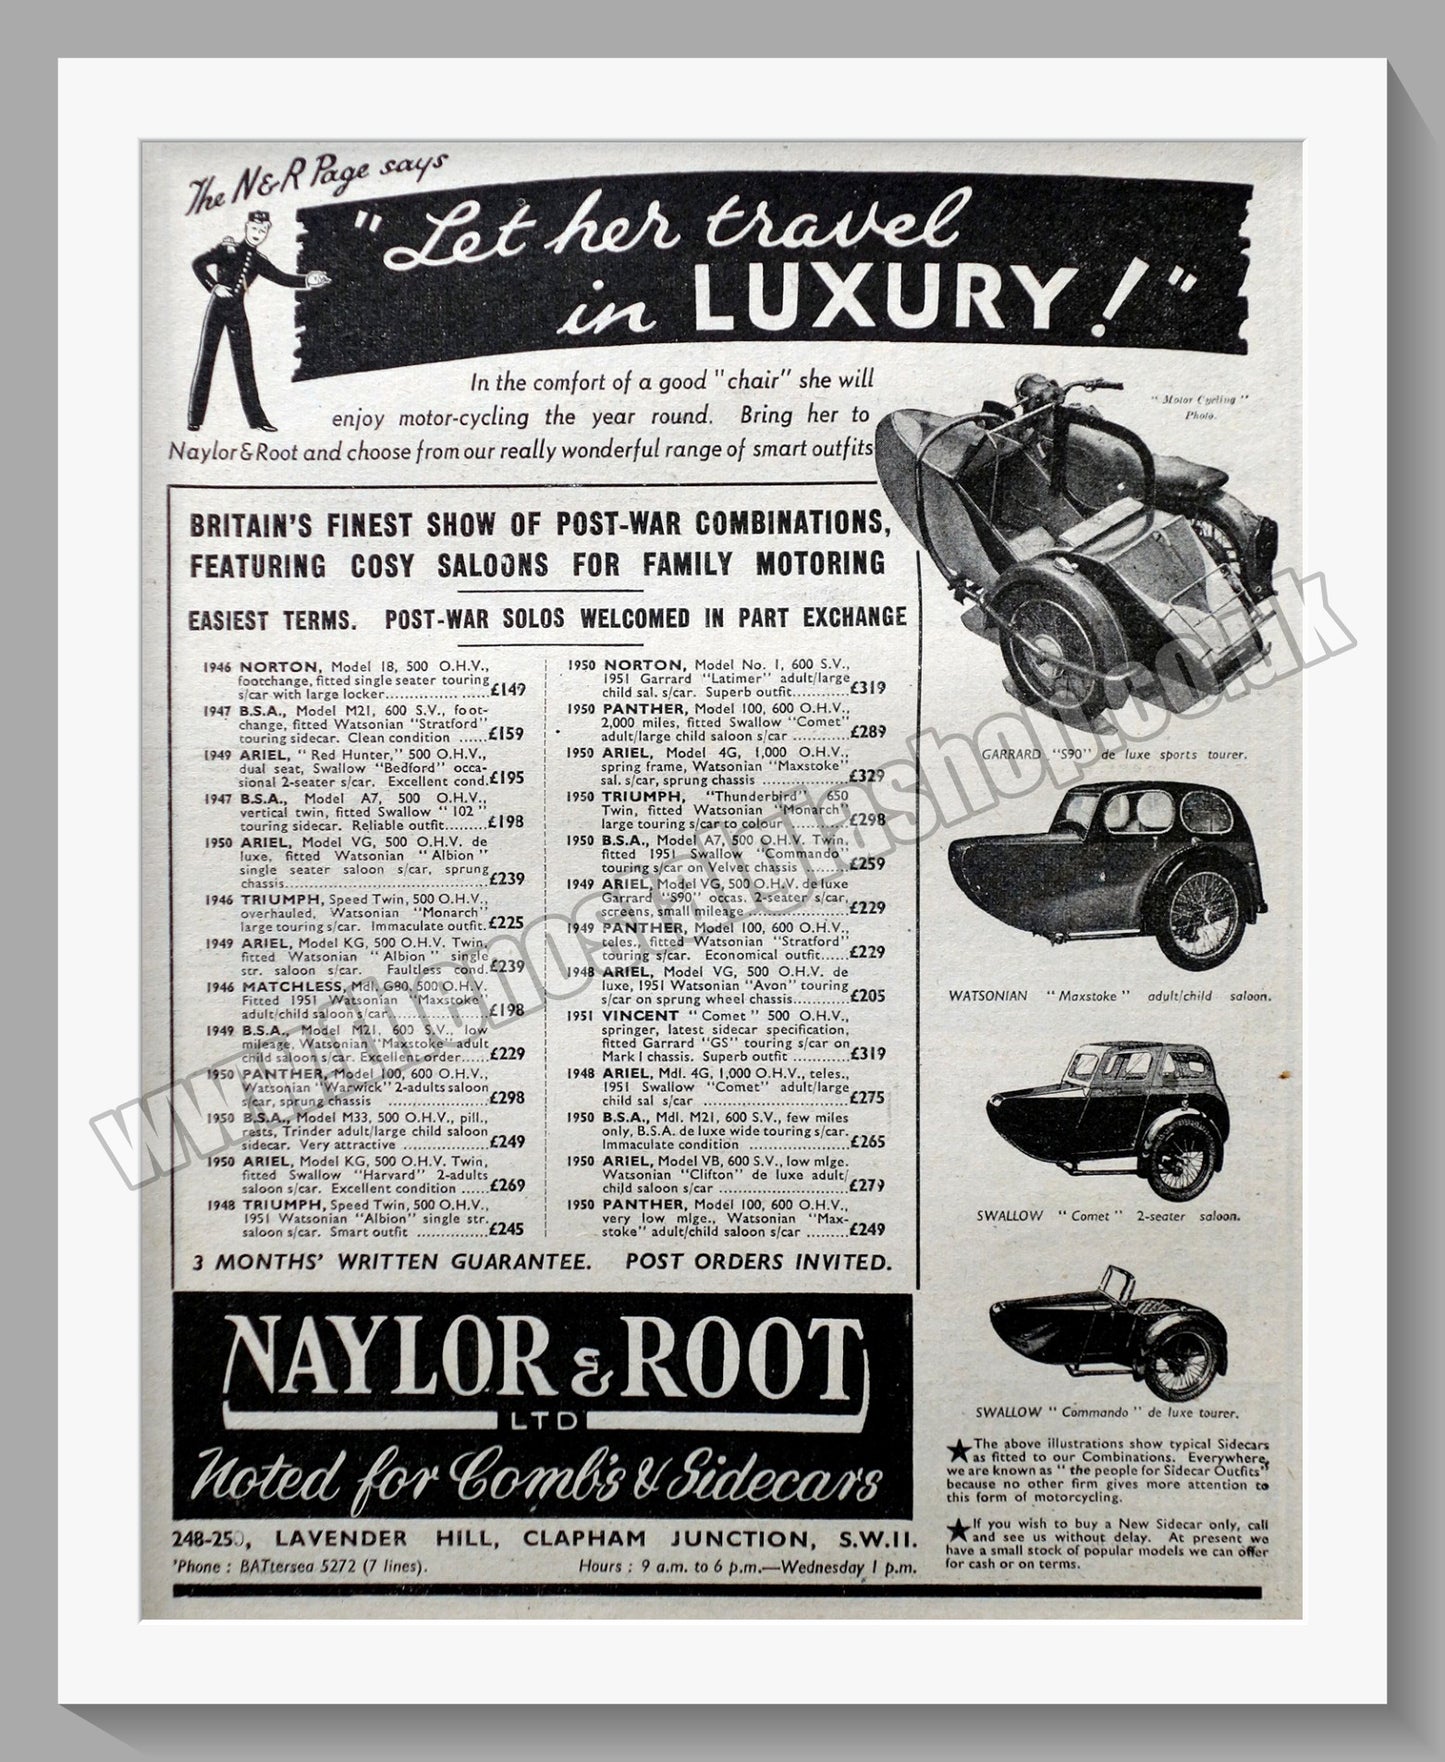 Naylor & Root Ltd Motorcycle Dealer. Original Advert 1951 (ref AD57507)